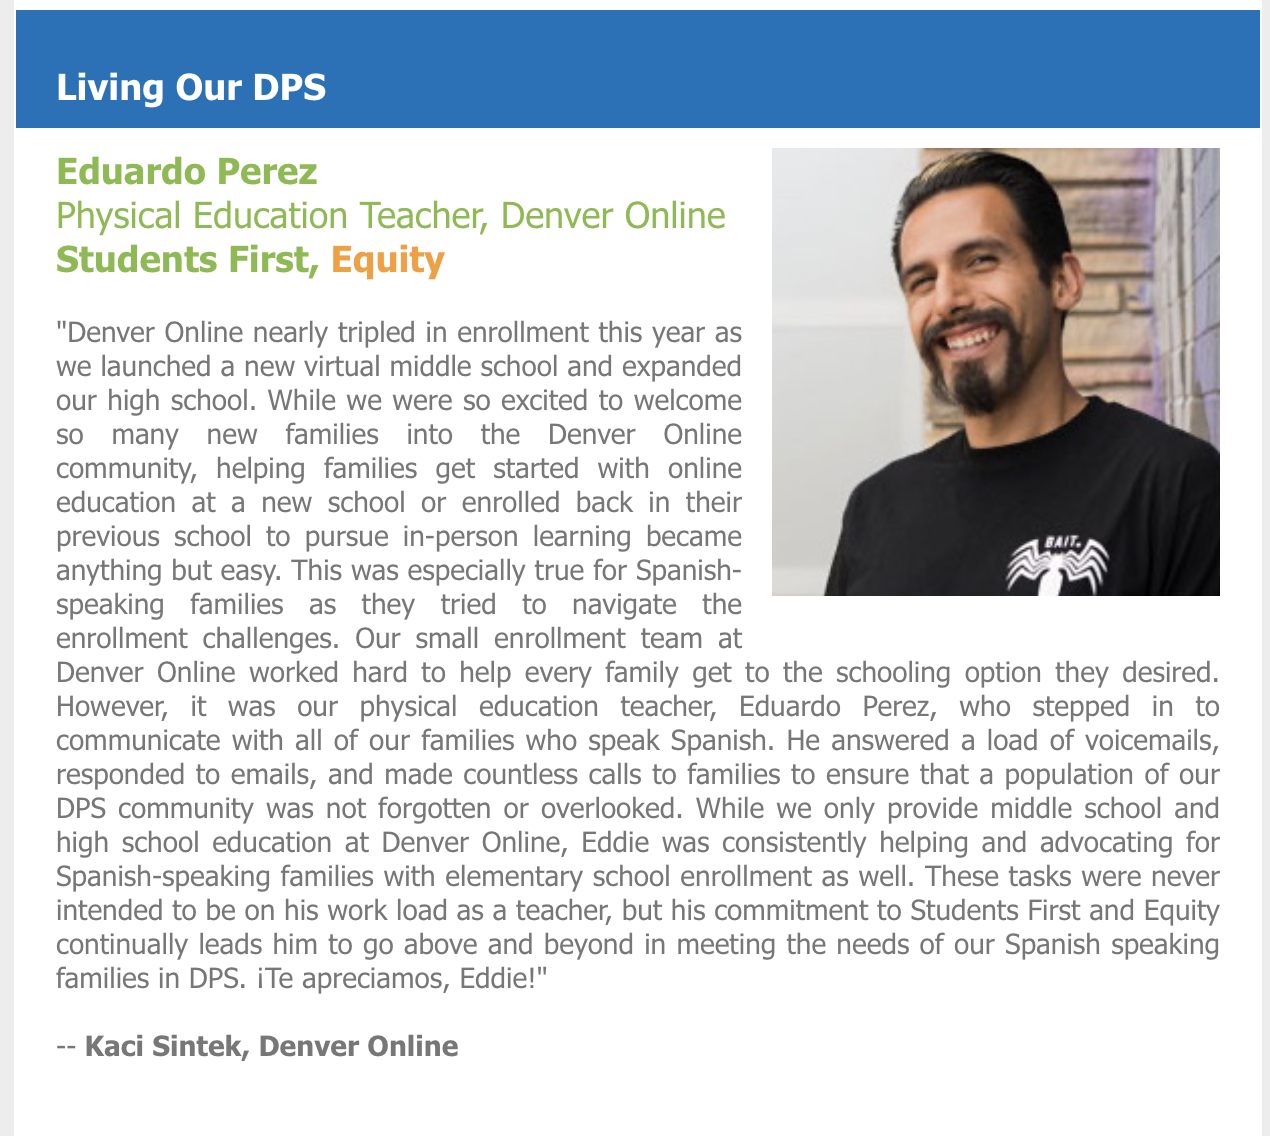 Denver Online's Teacher, Eduardo Perez, Recognized for EQUITY